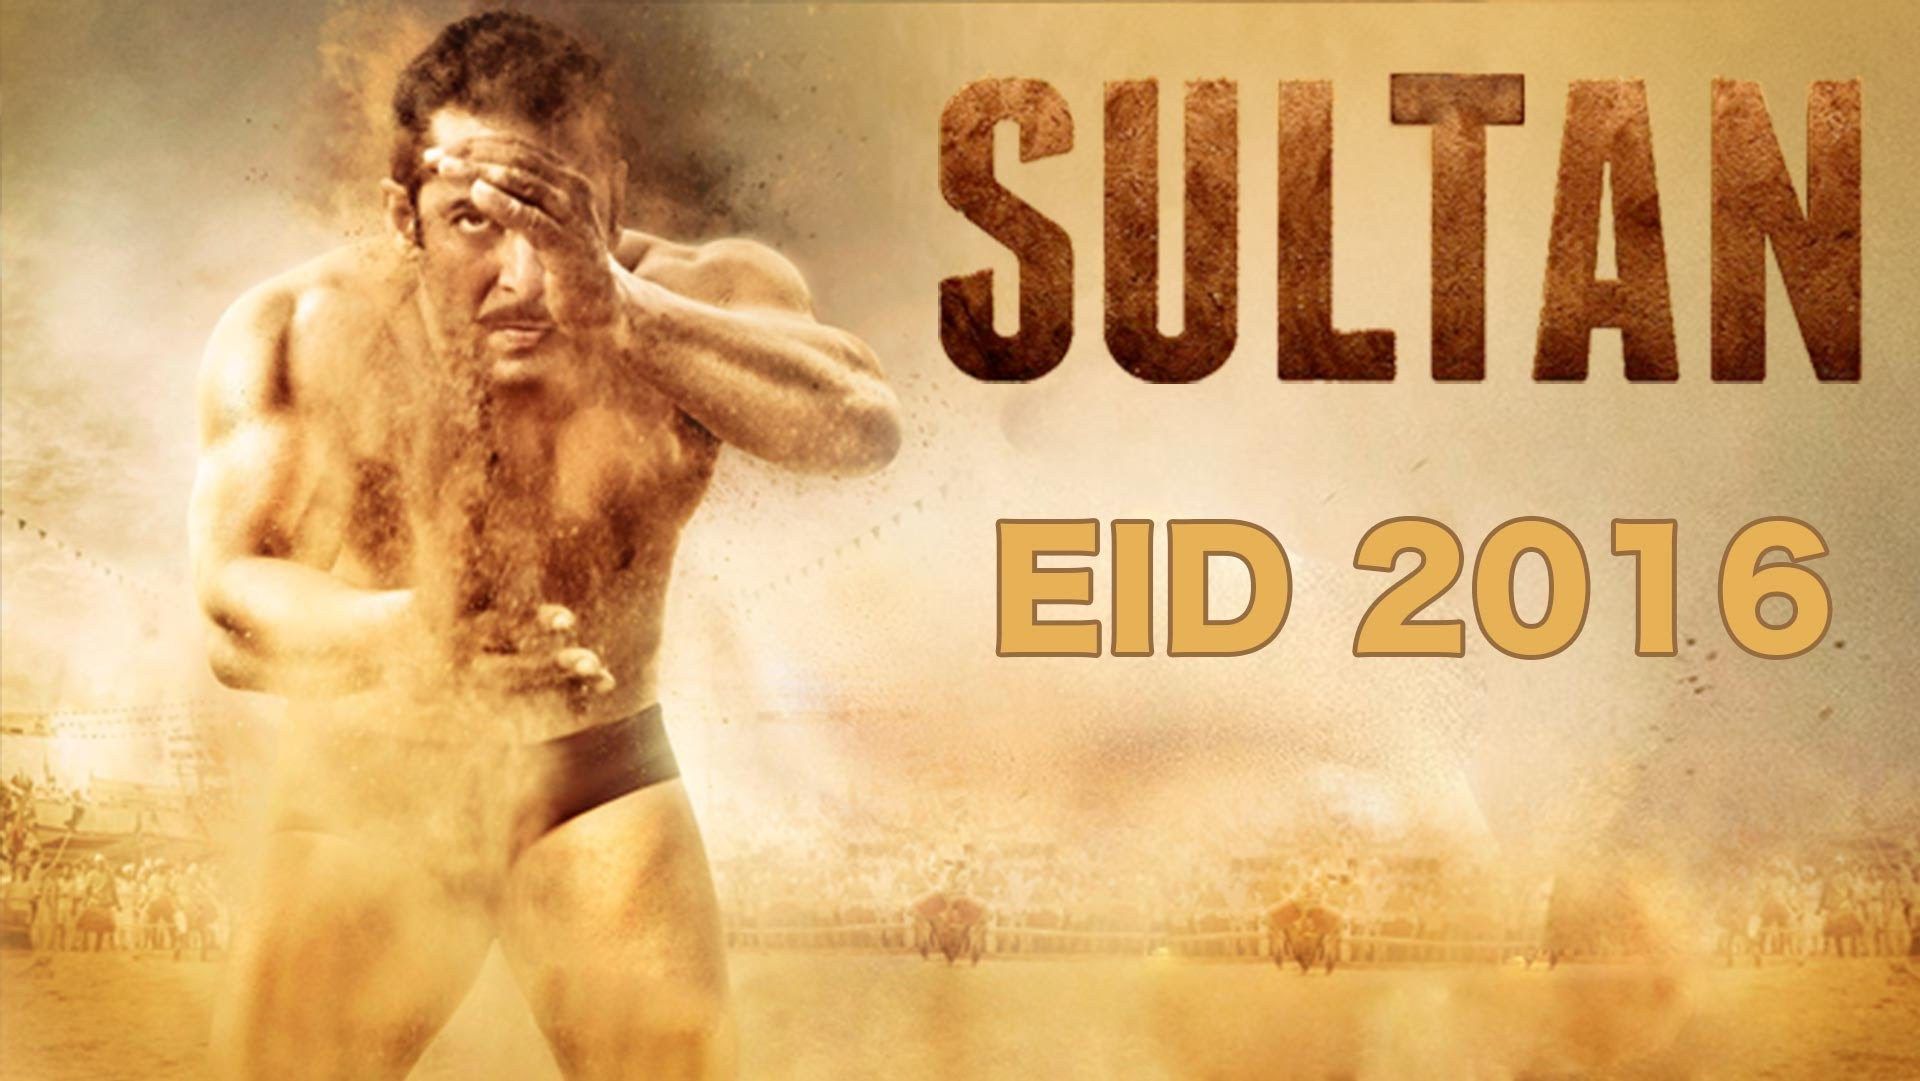 sultan full movie online hd